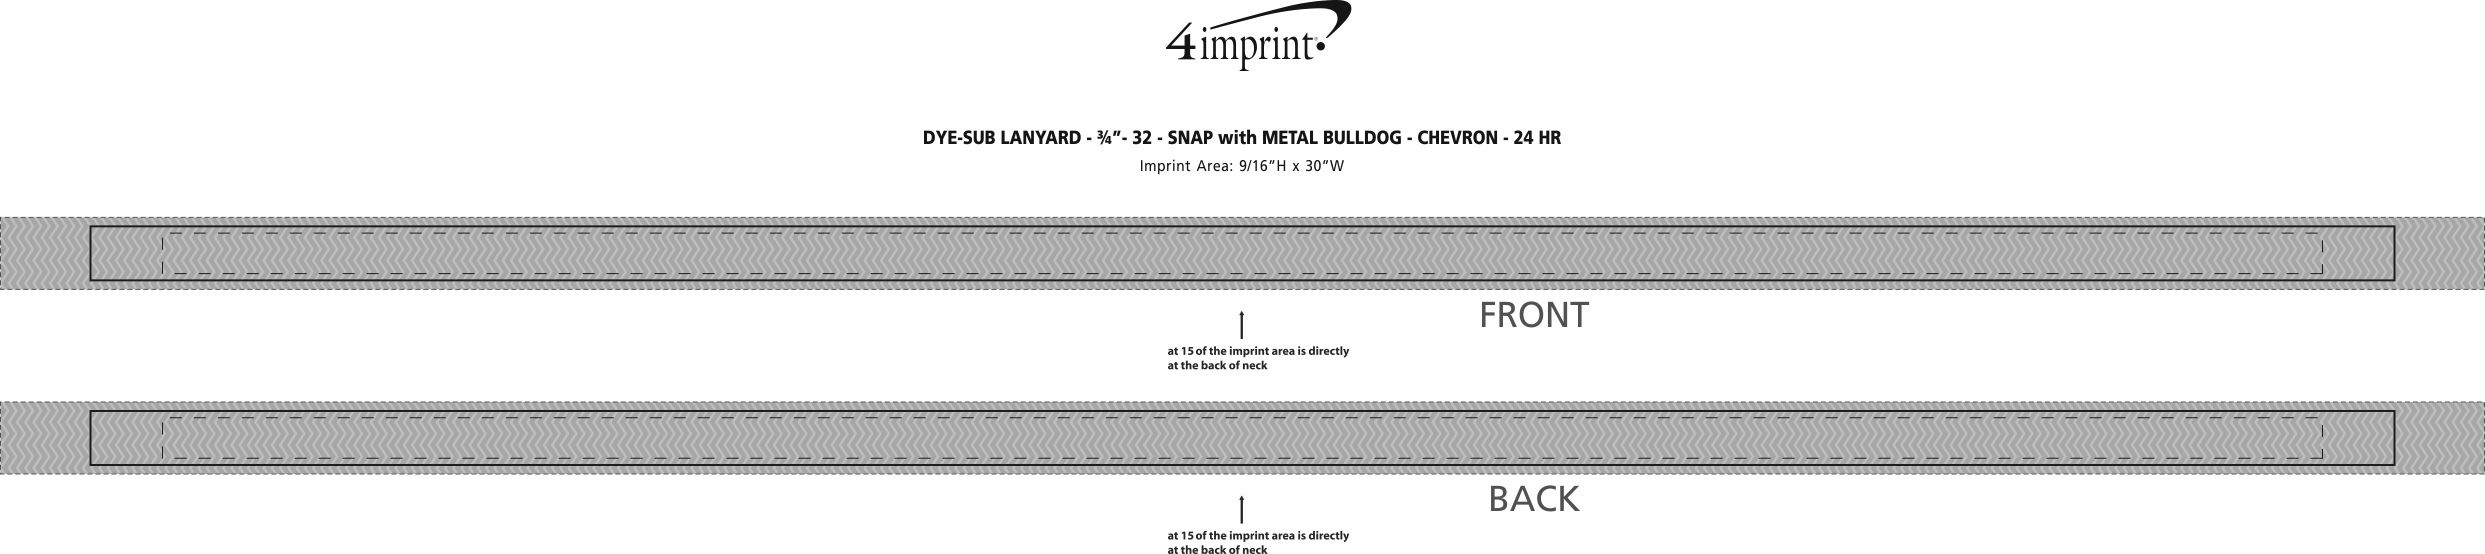 Imprint Area of Dye-Sub Lanyard - 3/4" - 32" - Snap with Metal Bulldog Clip - Chevron - 24 hr